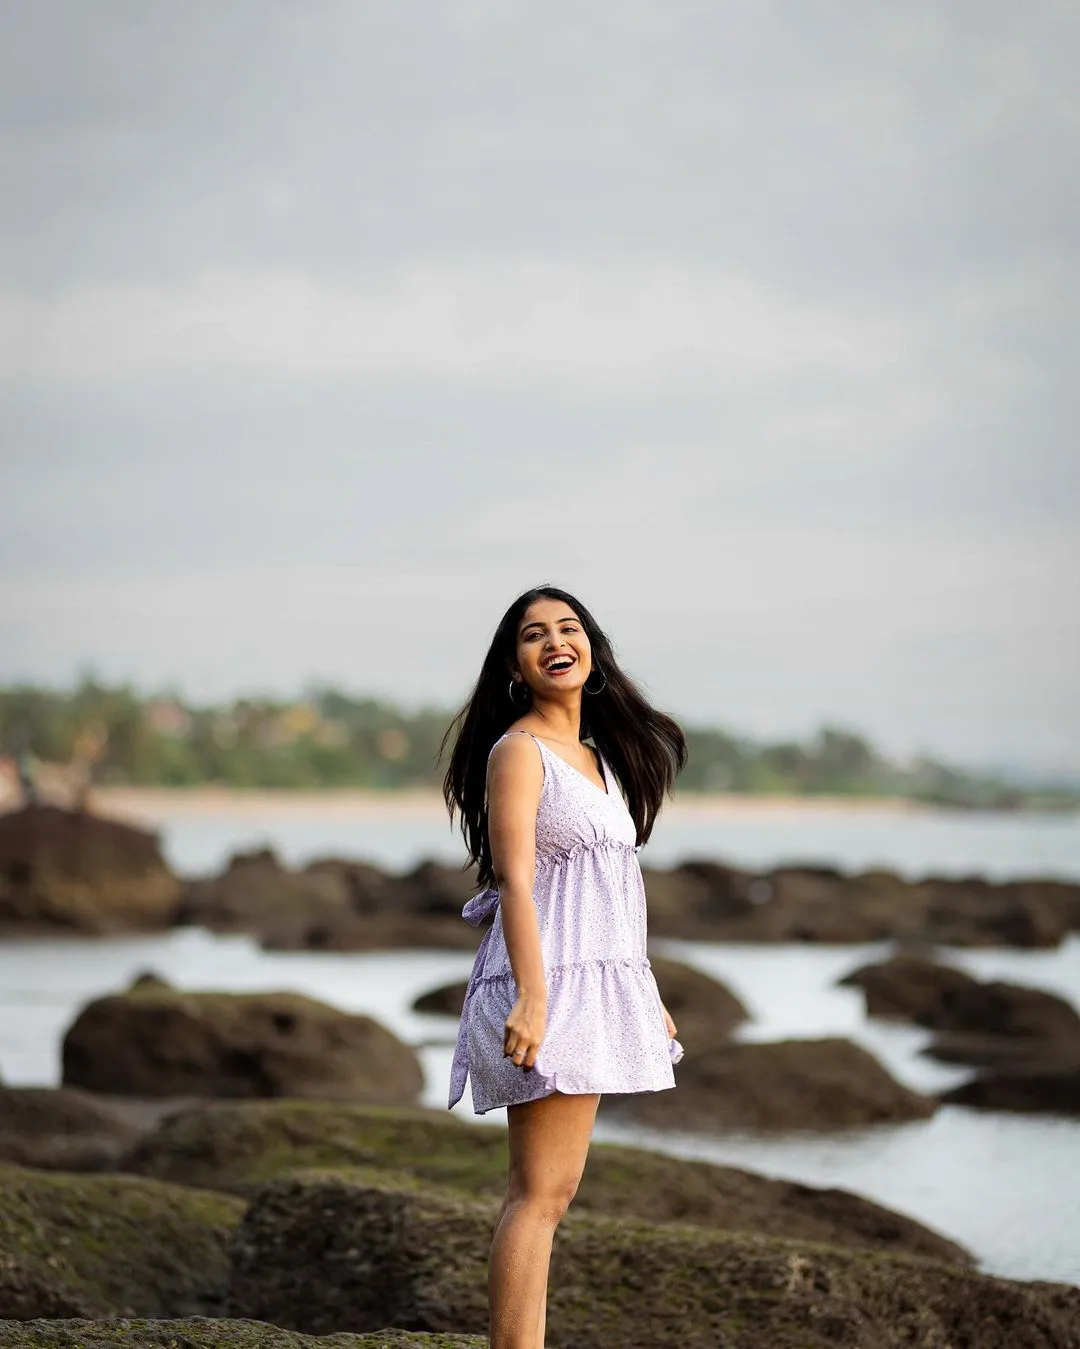 Ananya Nagalla Photoshoot in Short Gown at Beach 